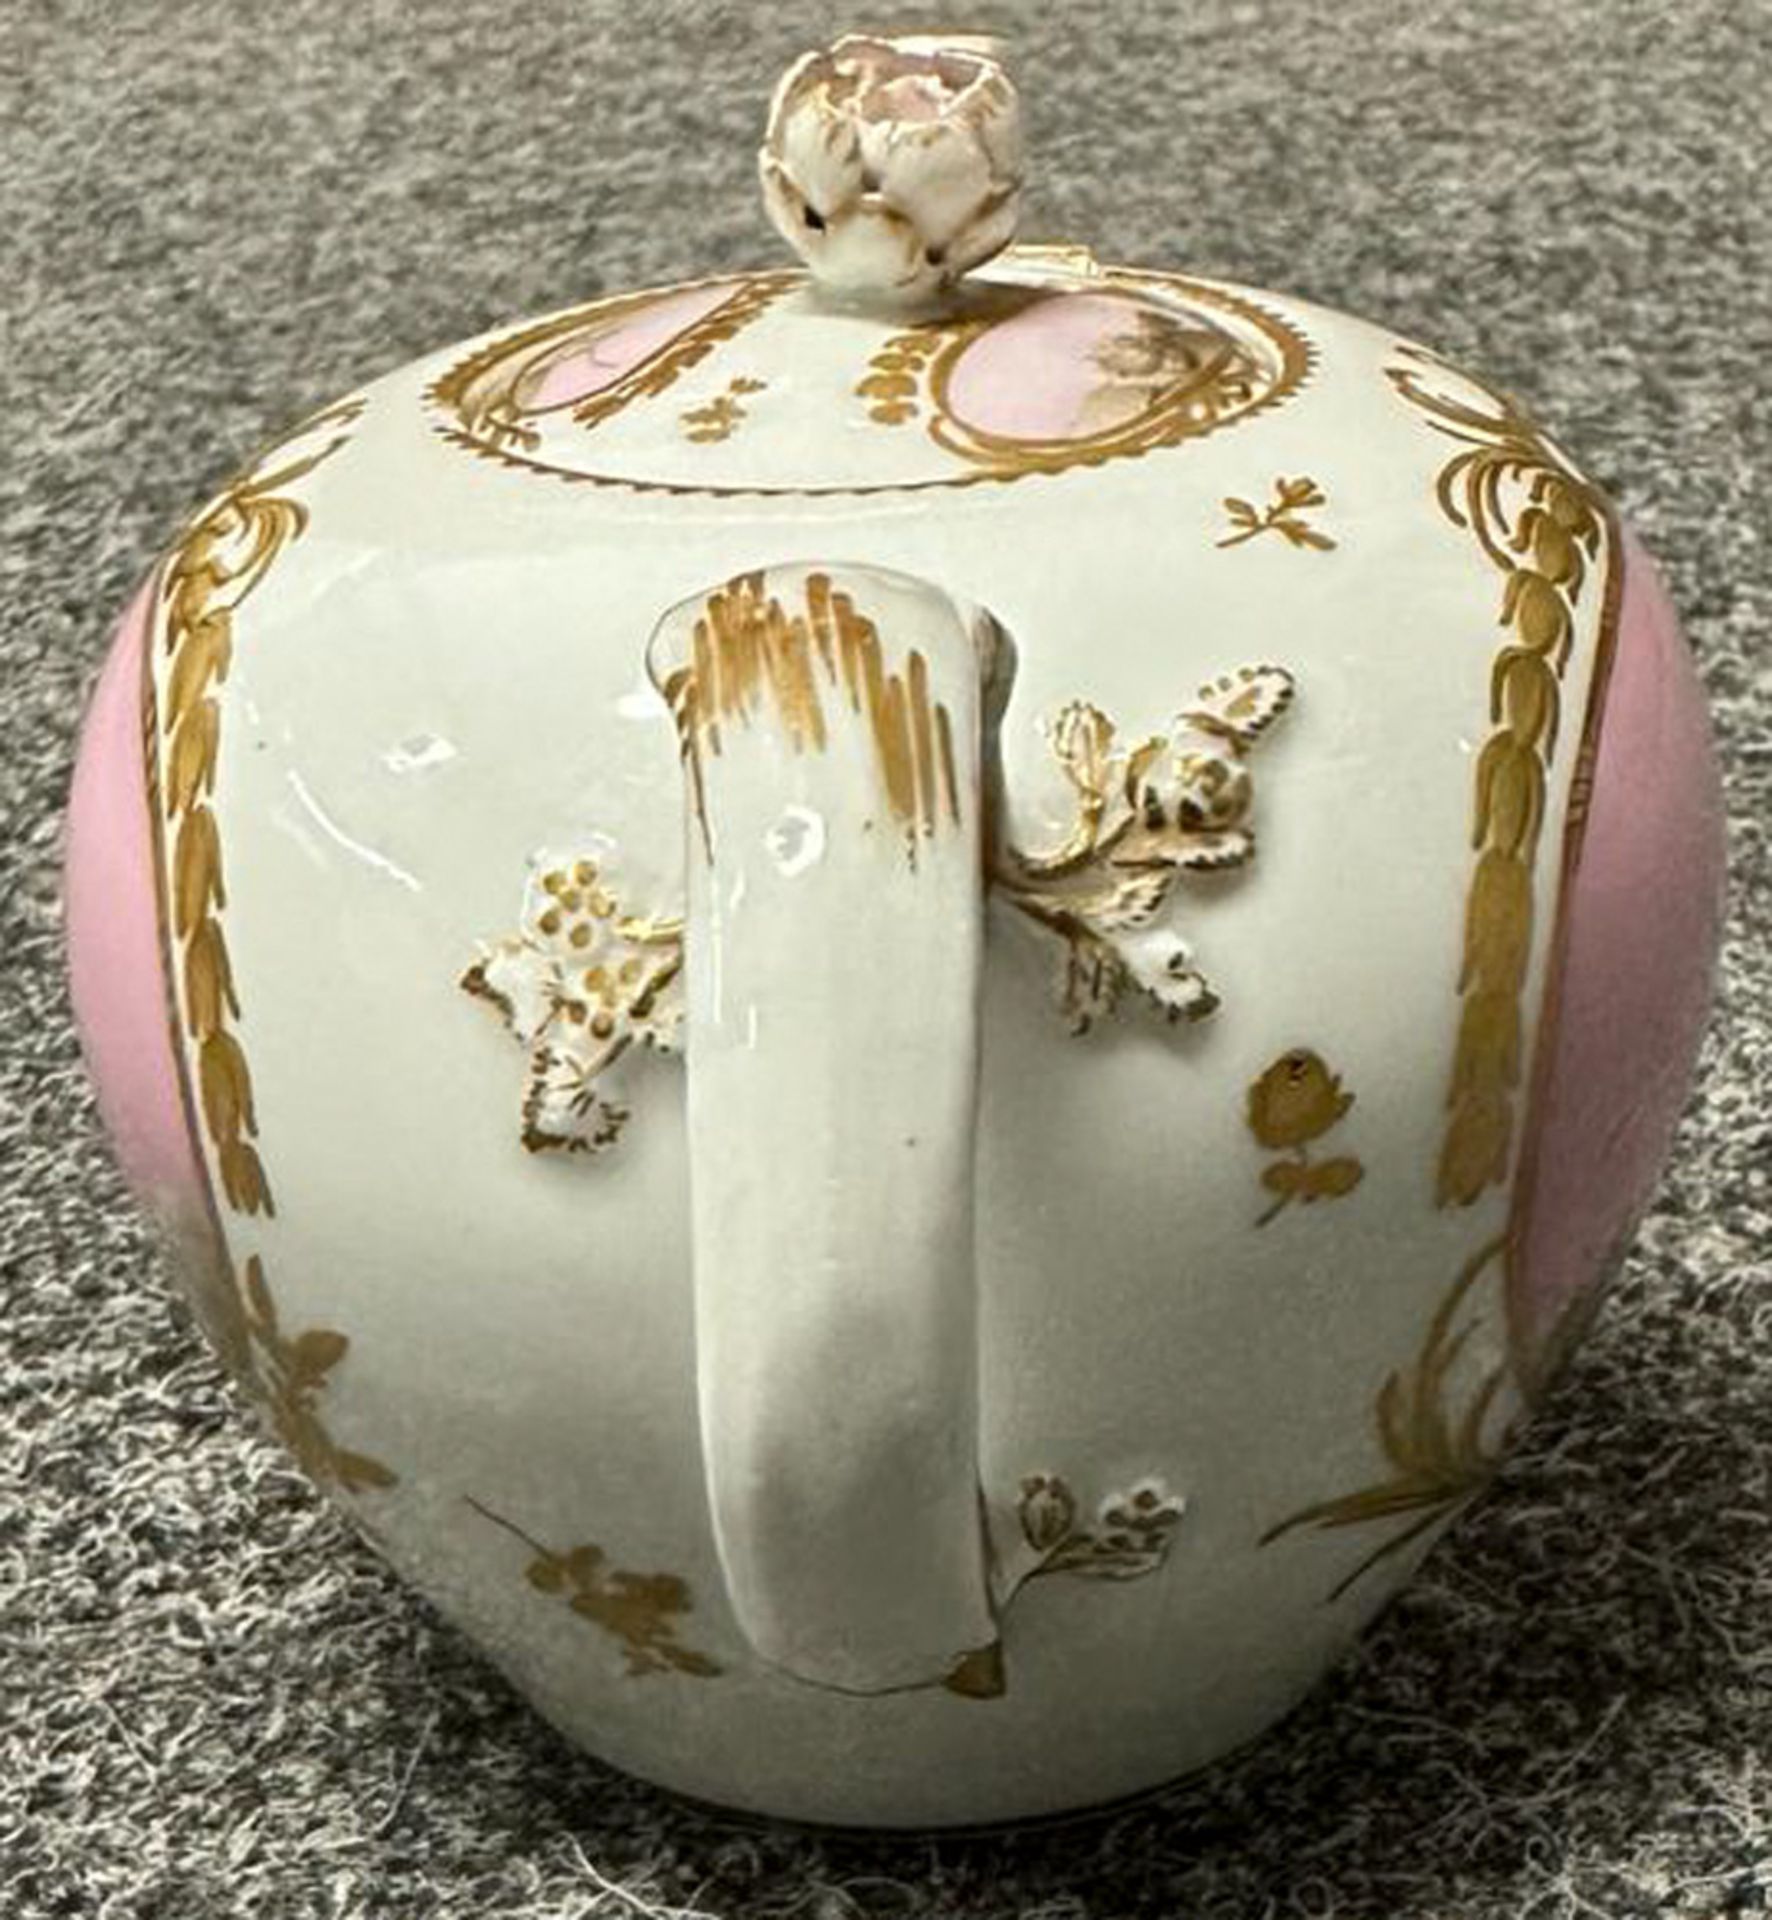 Achttlgs. Reiseservice im Koffer. Meissen 1763-73. Porzellan, auf rosafarbenem Fonds graucamaieu - Image 26 of 34